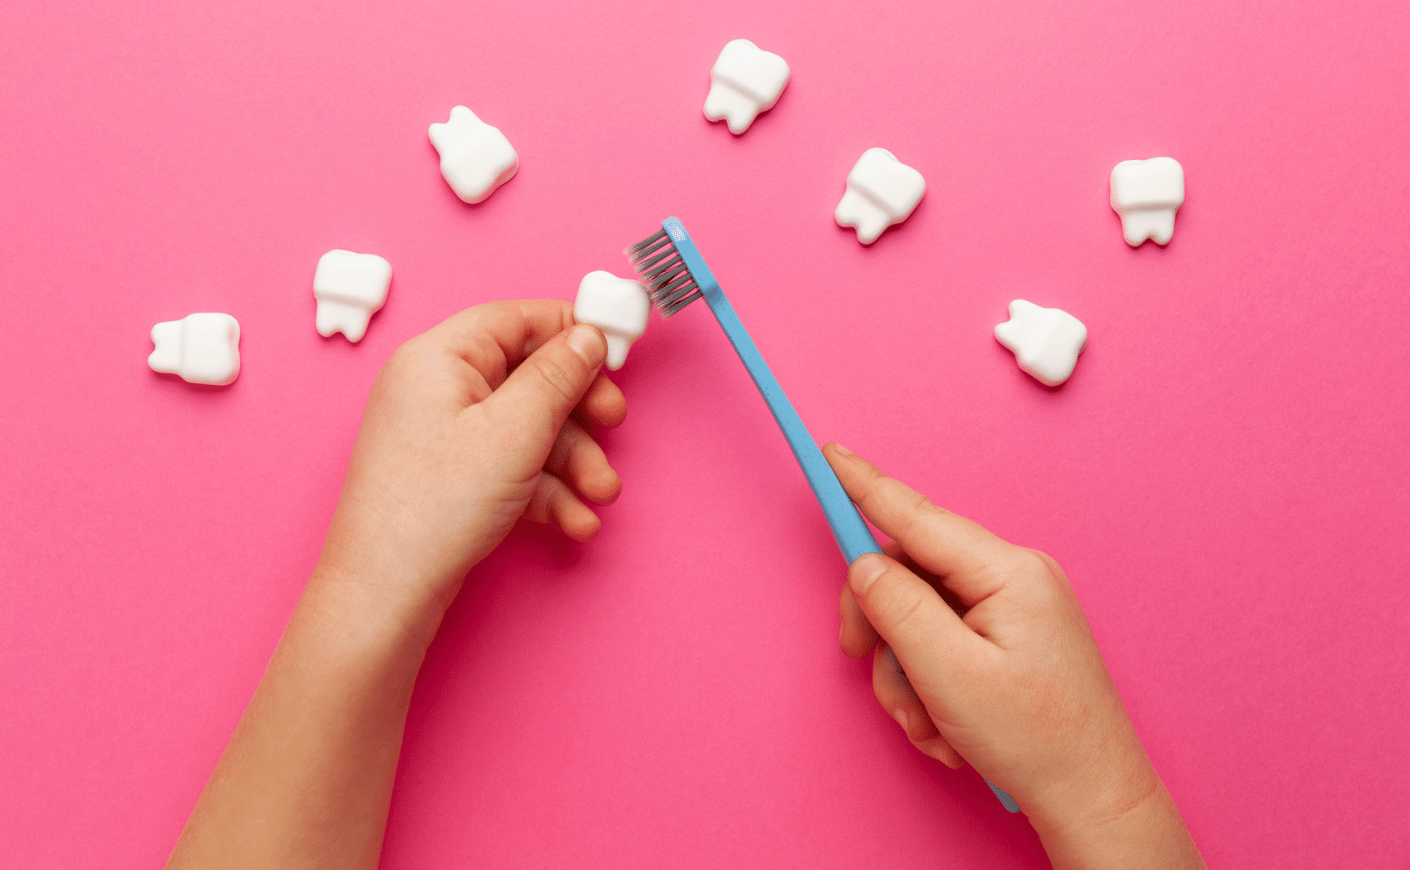 brushing teeth on pink background